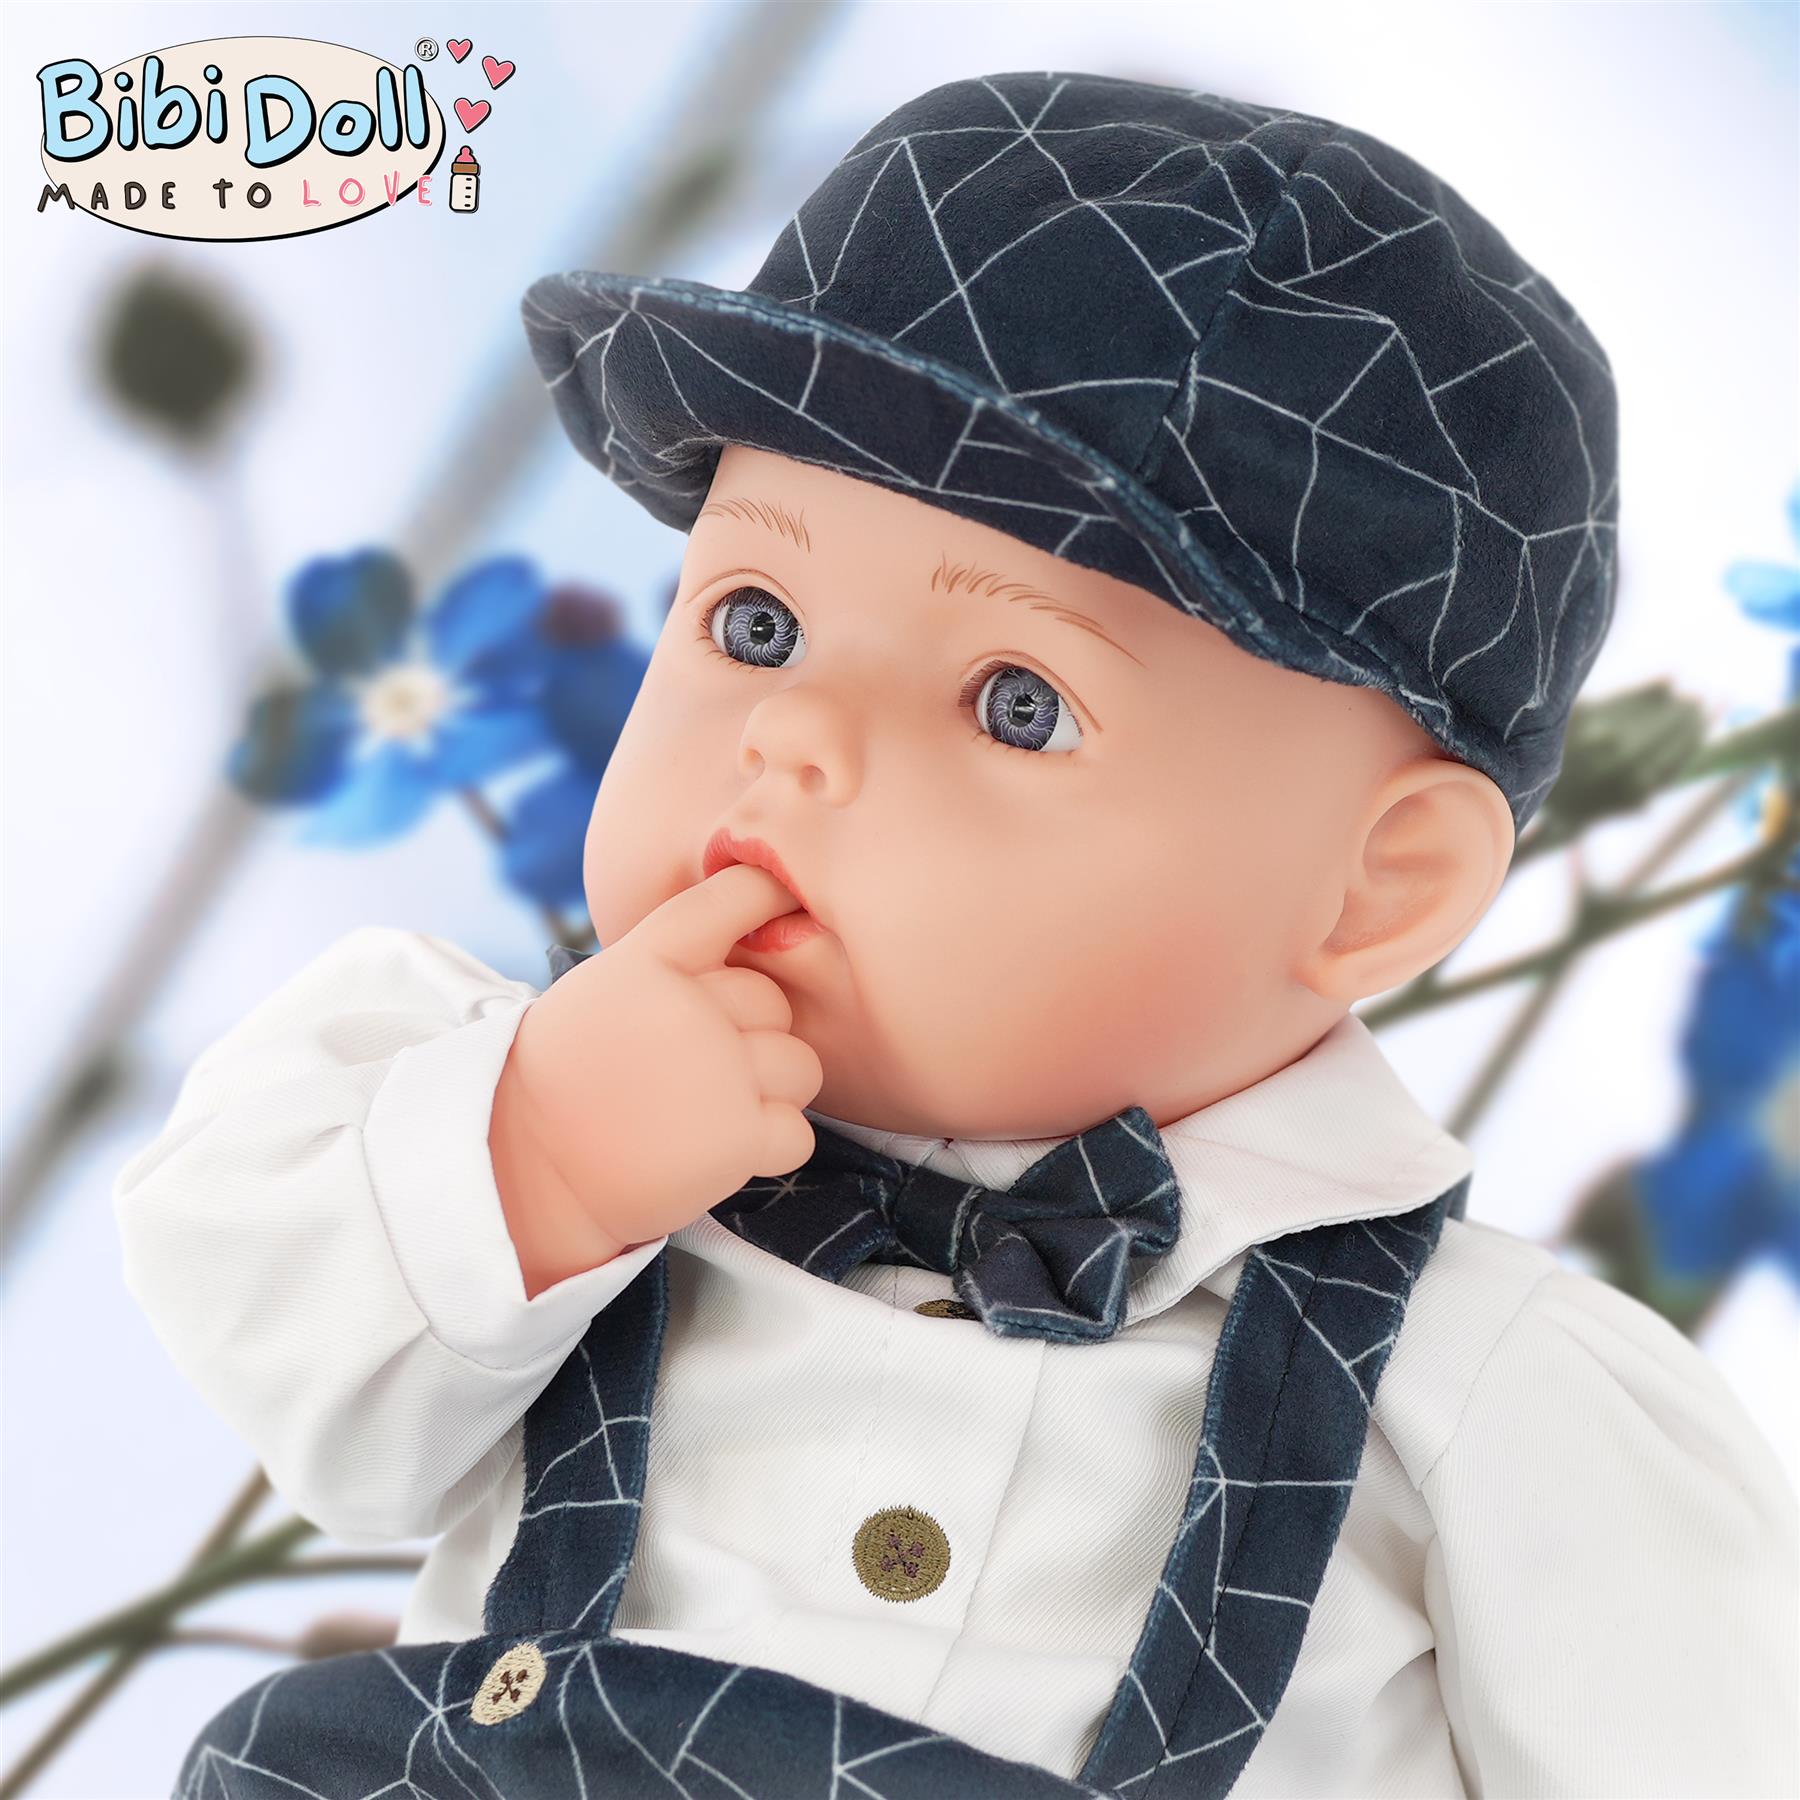 BiBi Baby Doll "Pebble" (50 cm / 20") by BiBi Doll - UKBuyZone